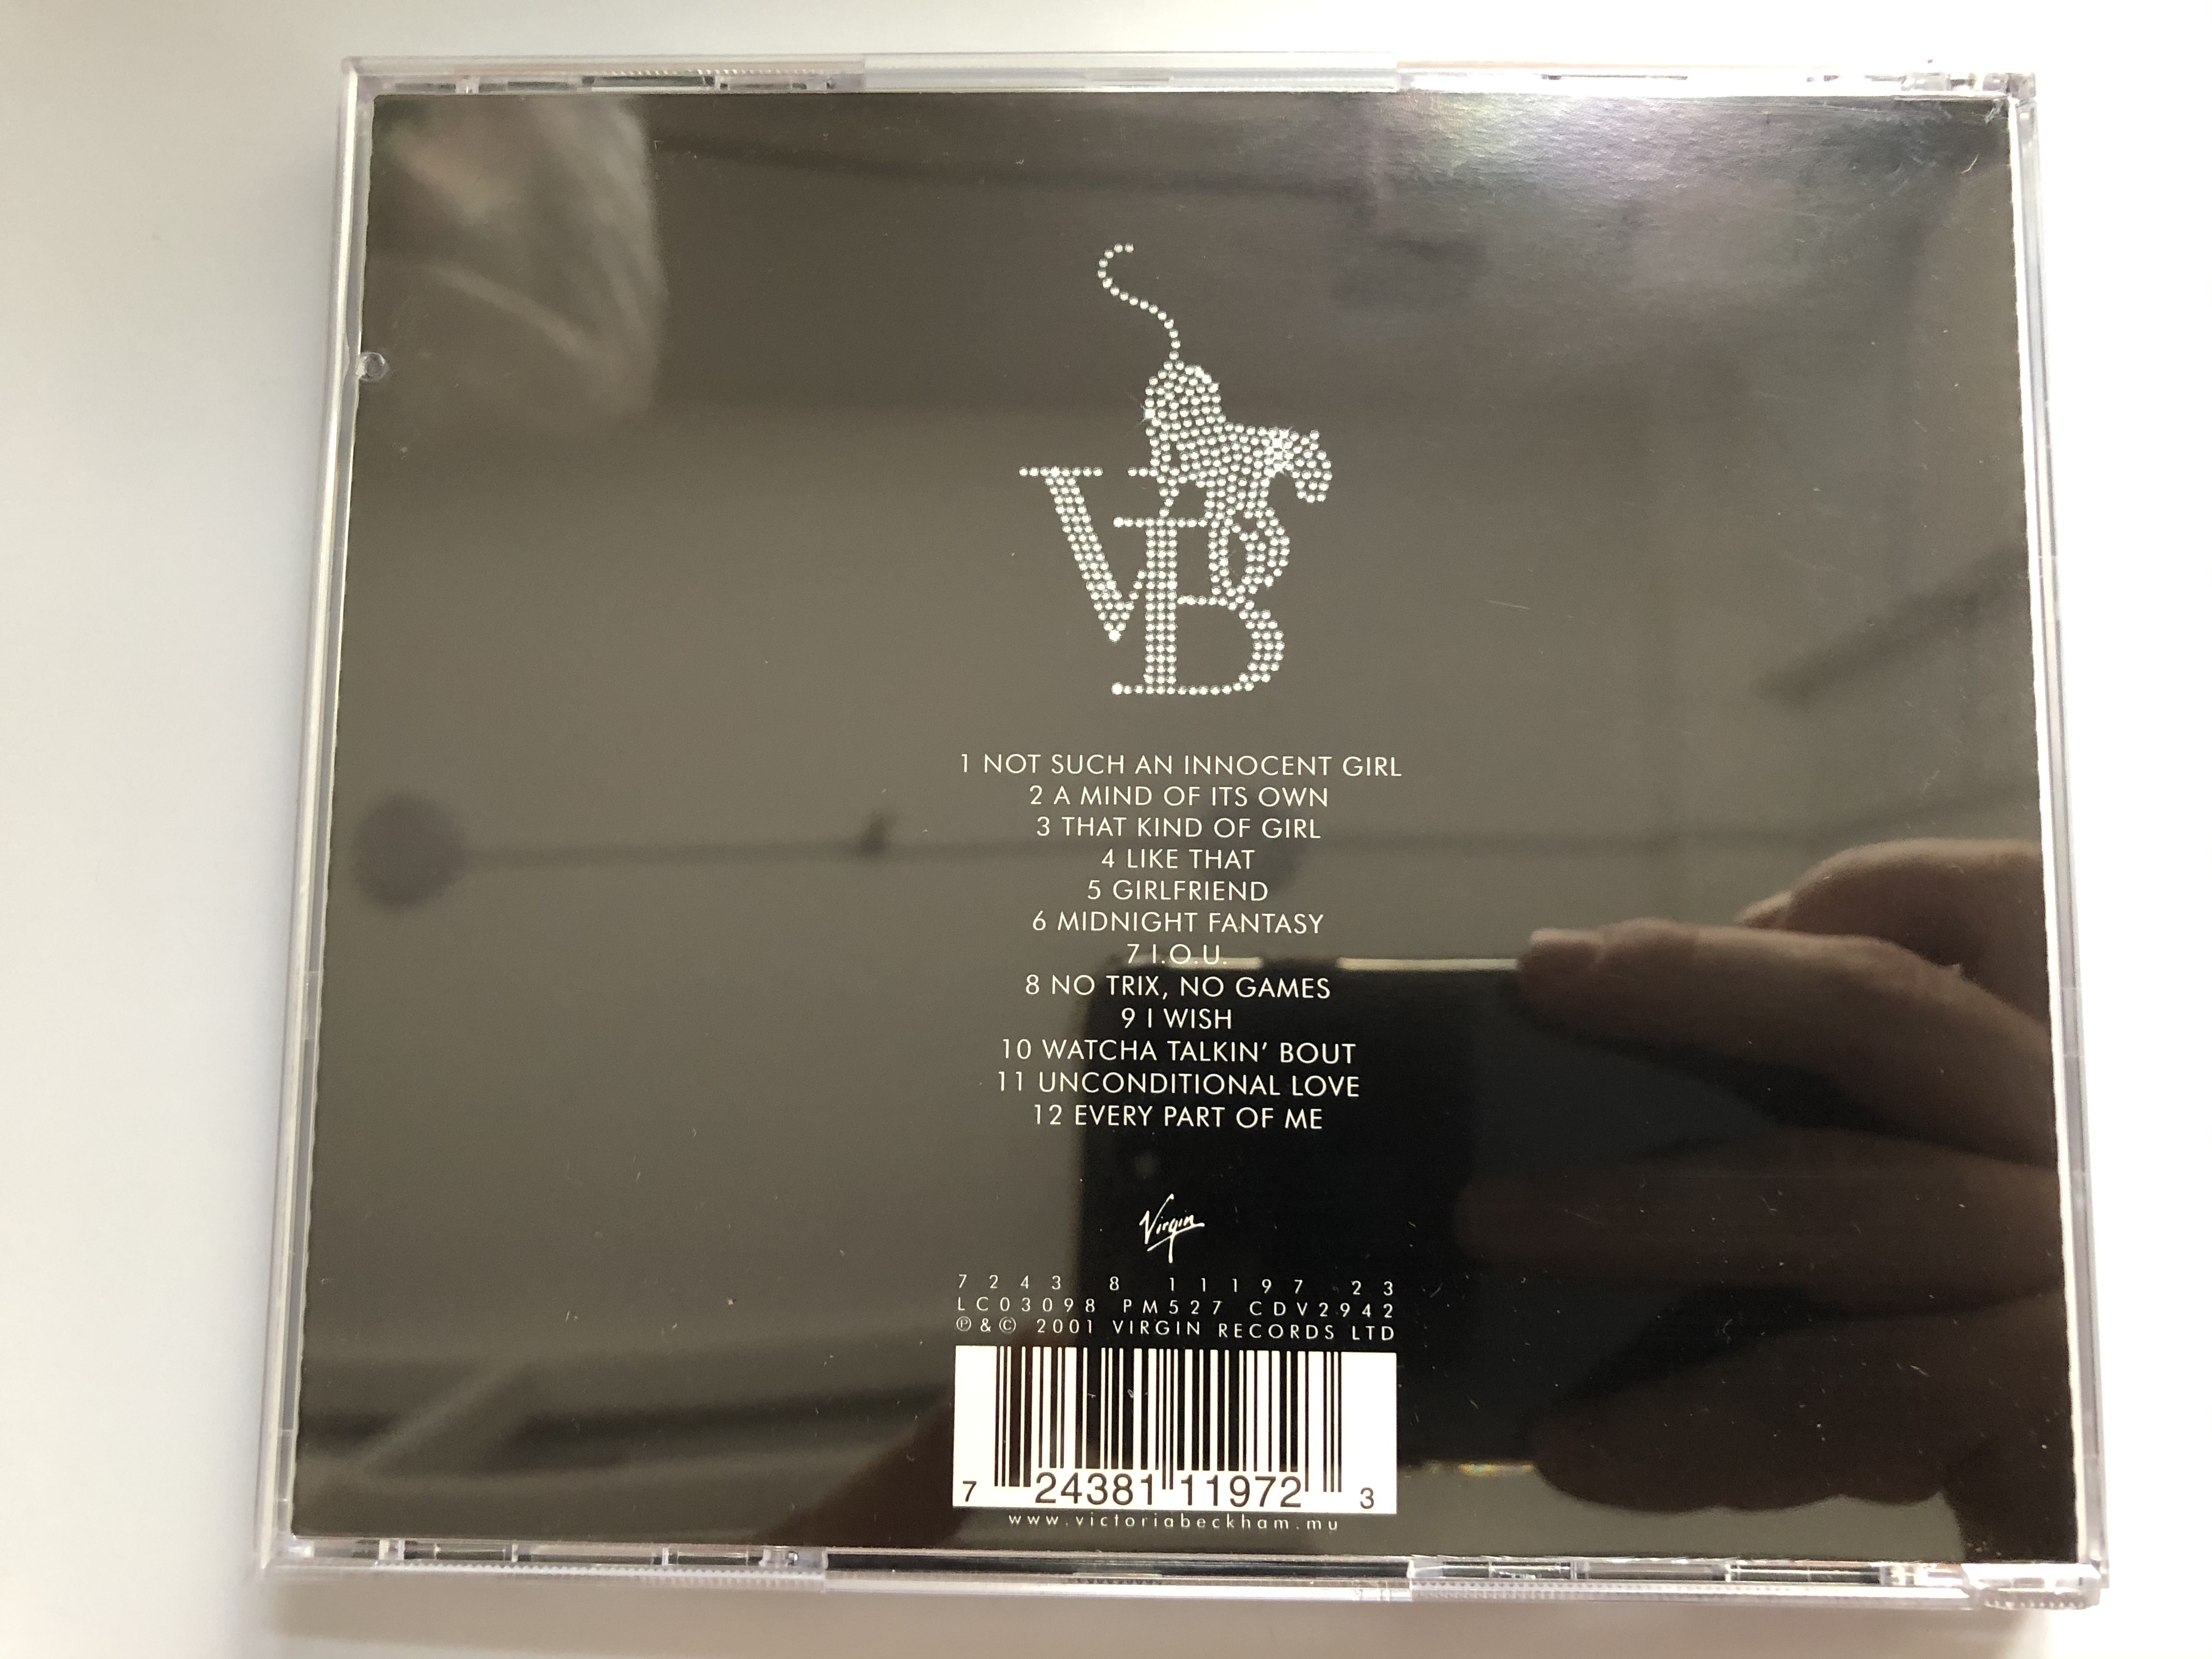 victoria-beckham-virgin-audio-cd-2001-724381119723-3-.jpg